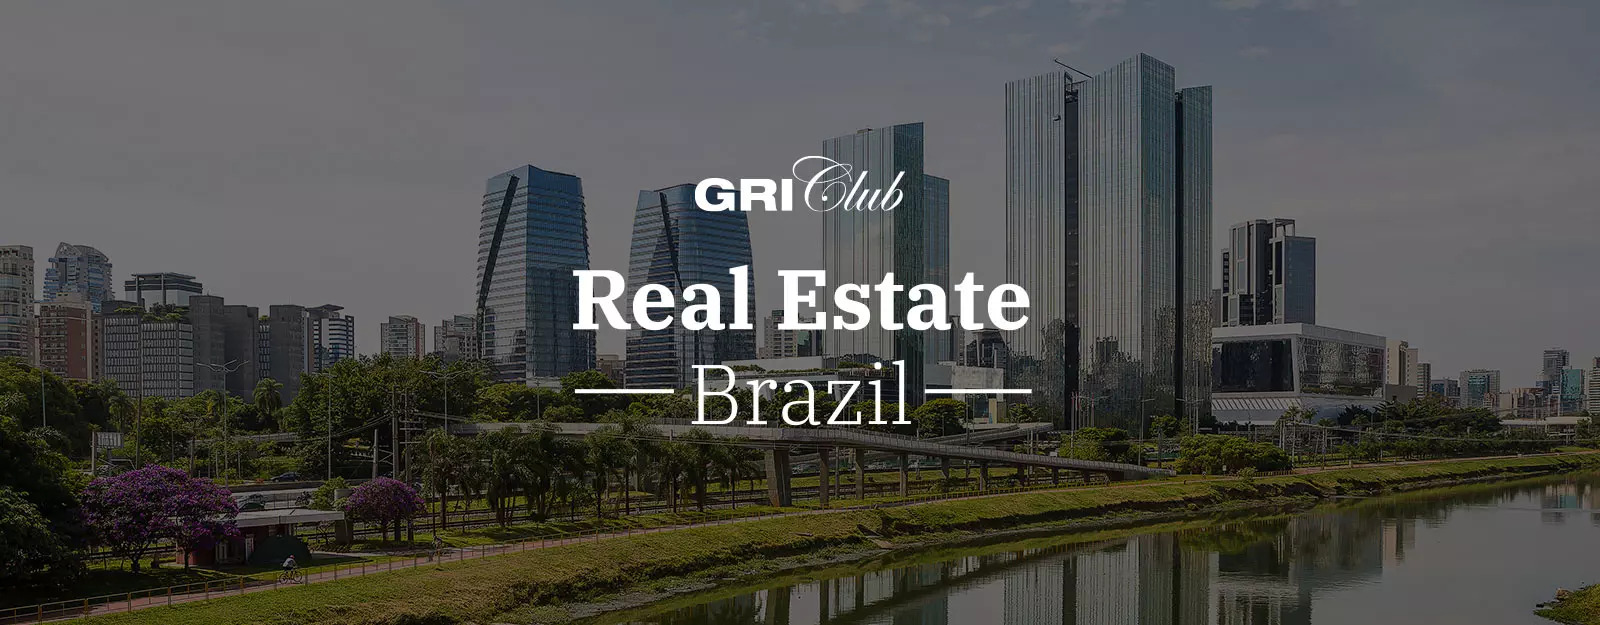 Real Estate Brazil Club